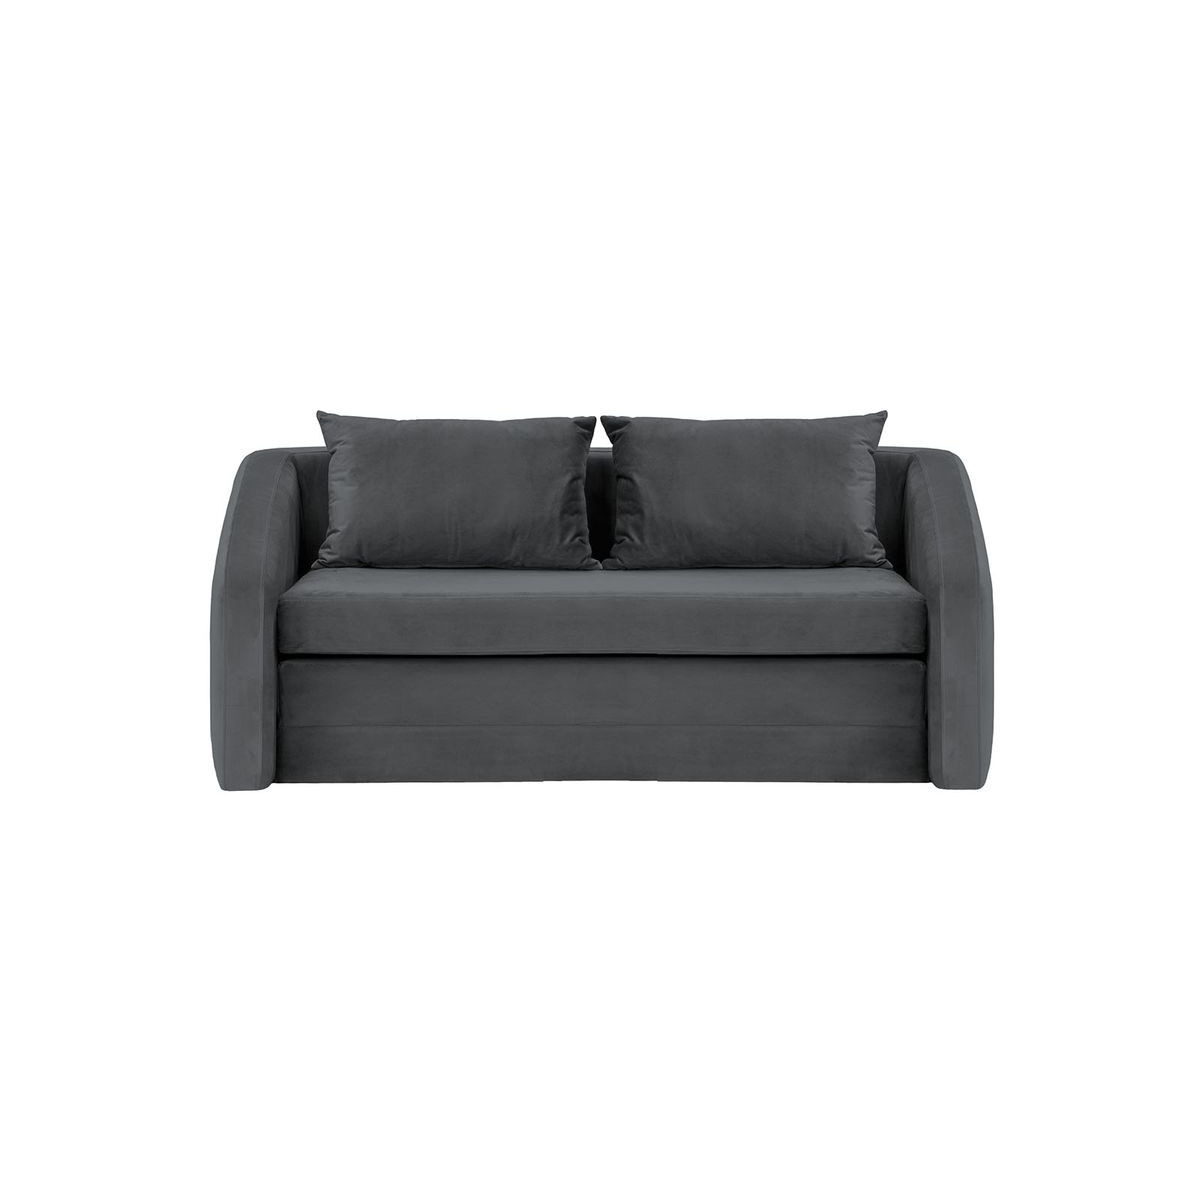 Alma 3 Seater Sofa Bed, boucle grey - image 1